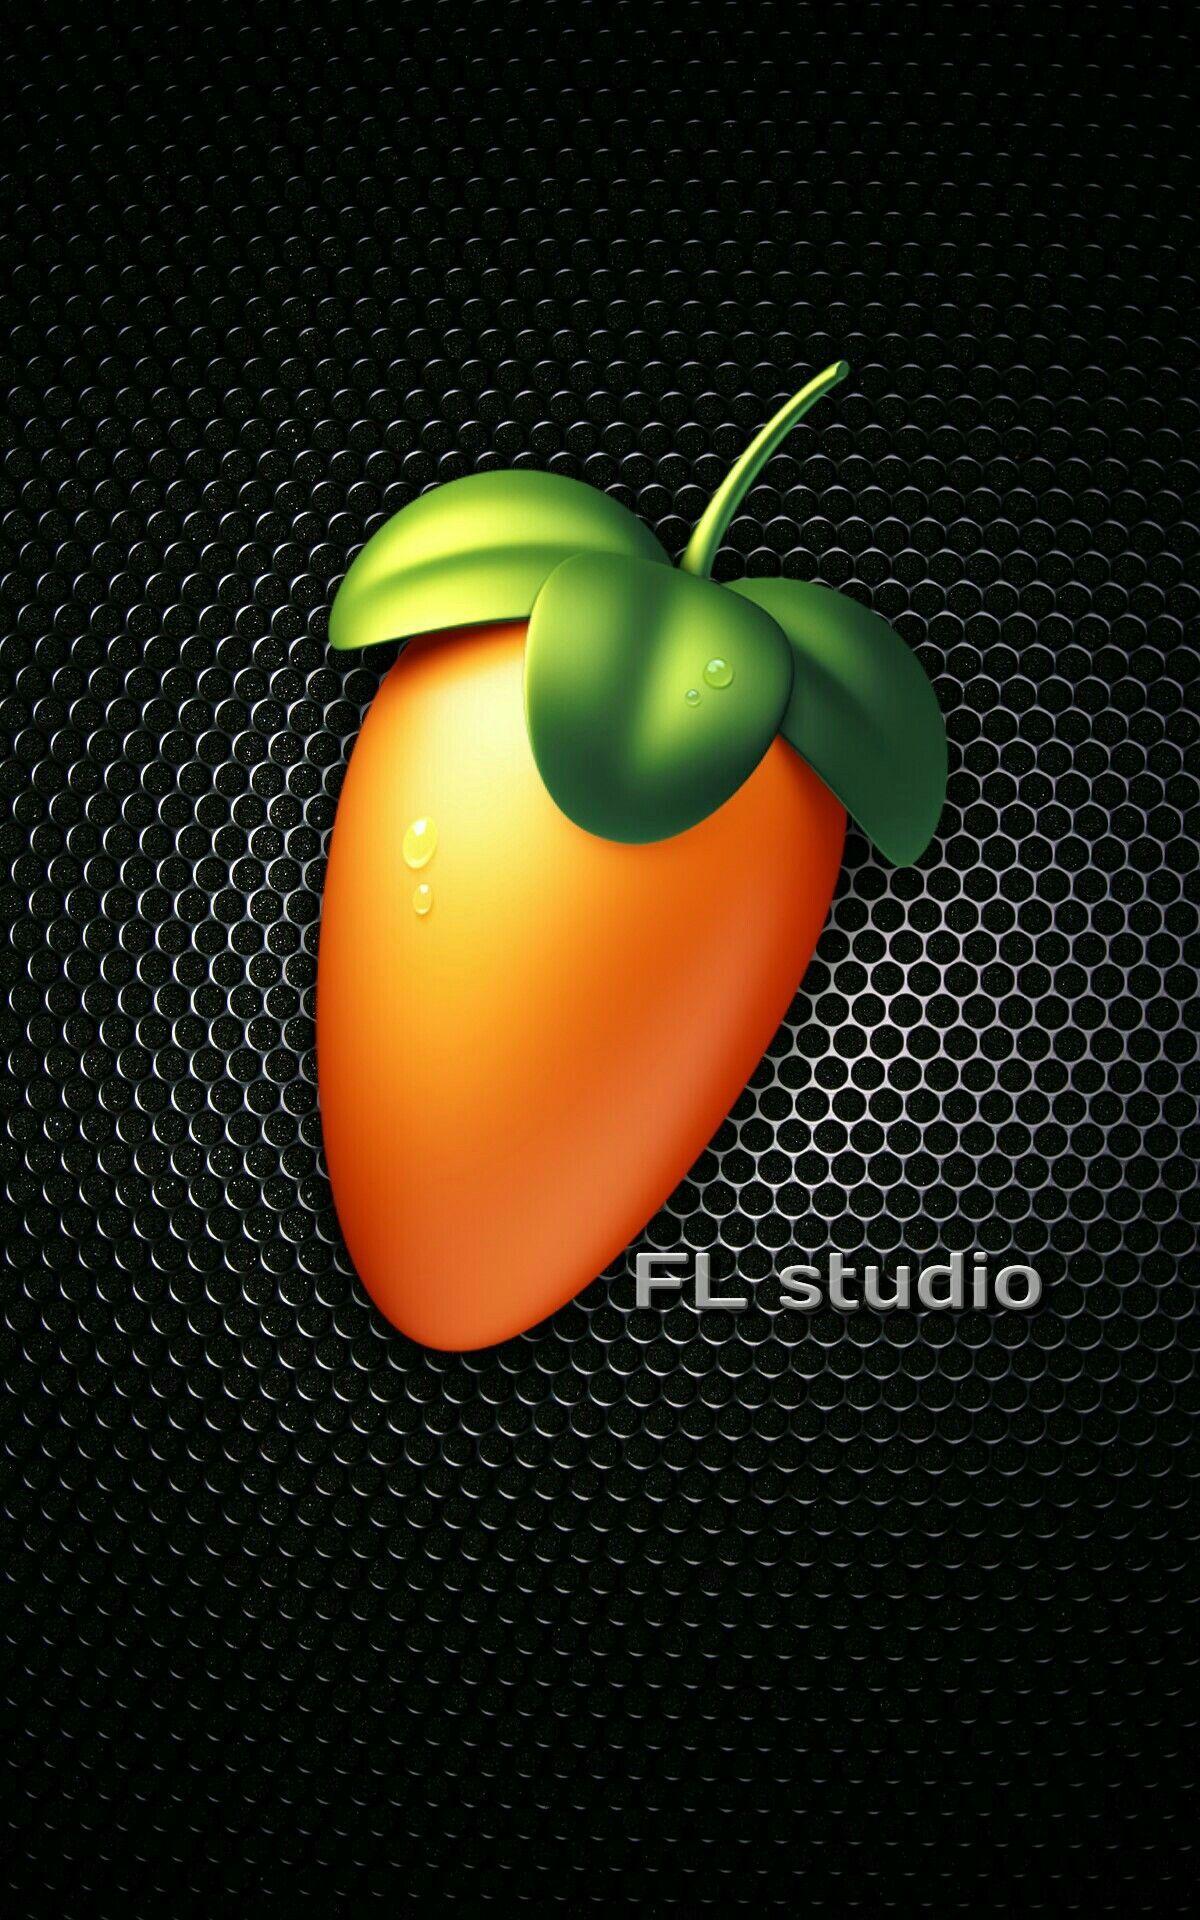 fl studio logo stuck on screen